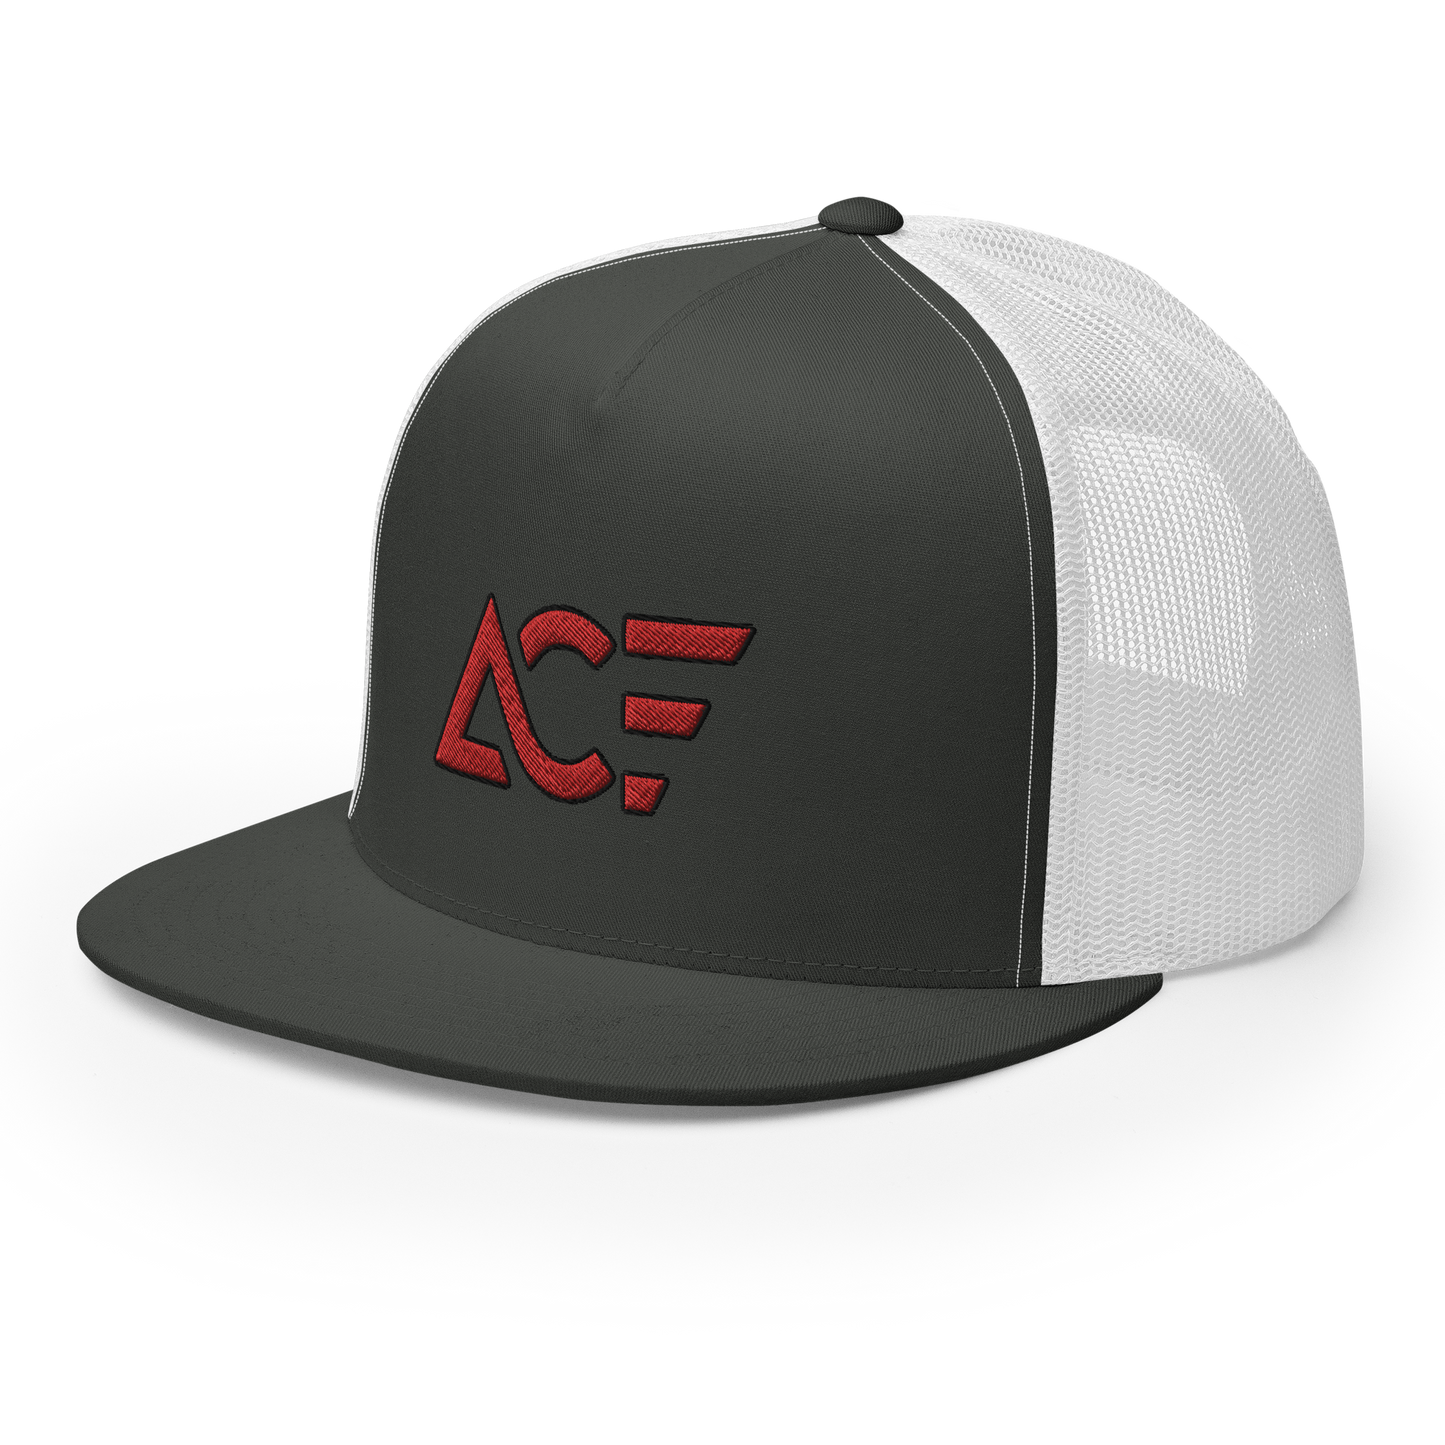 ACE TRUCKER CAP